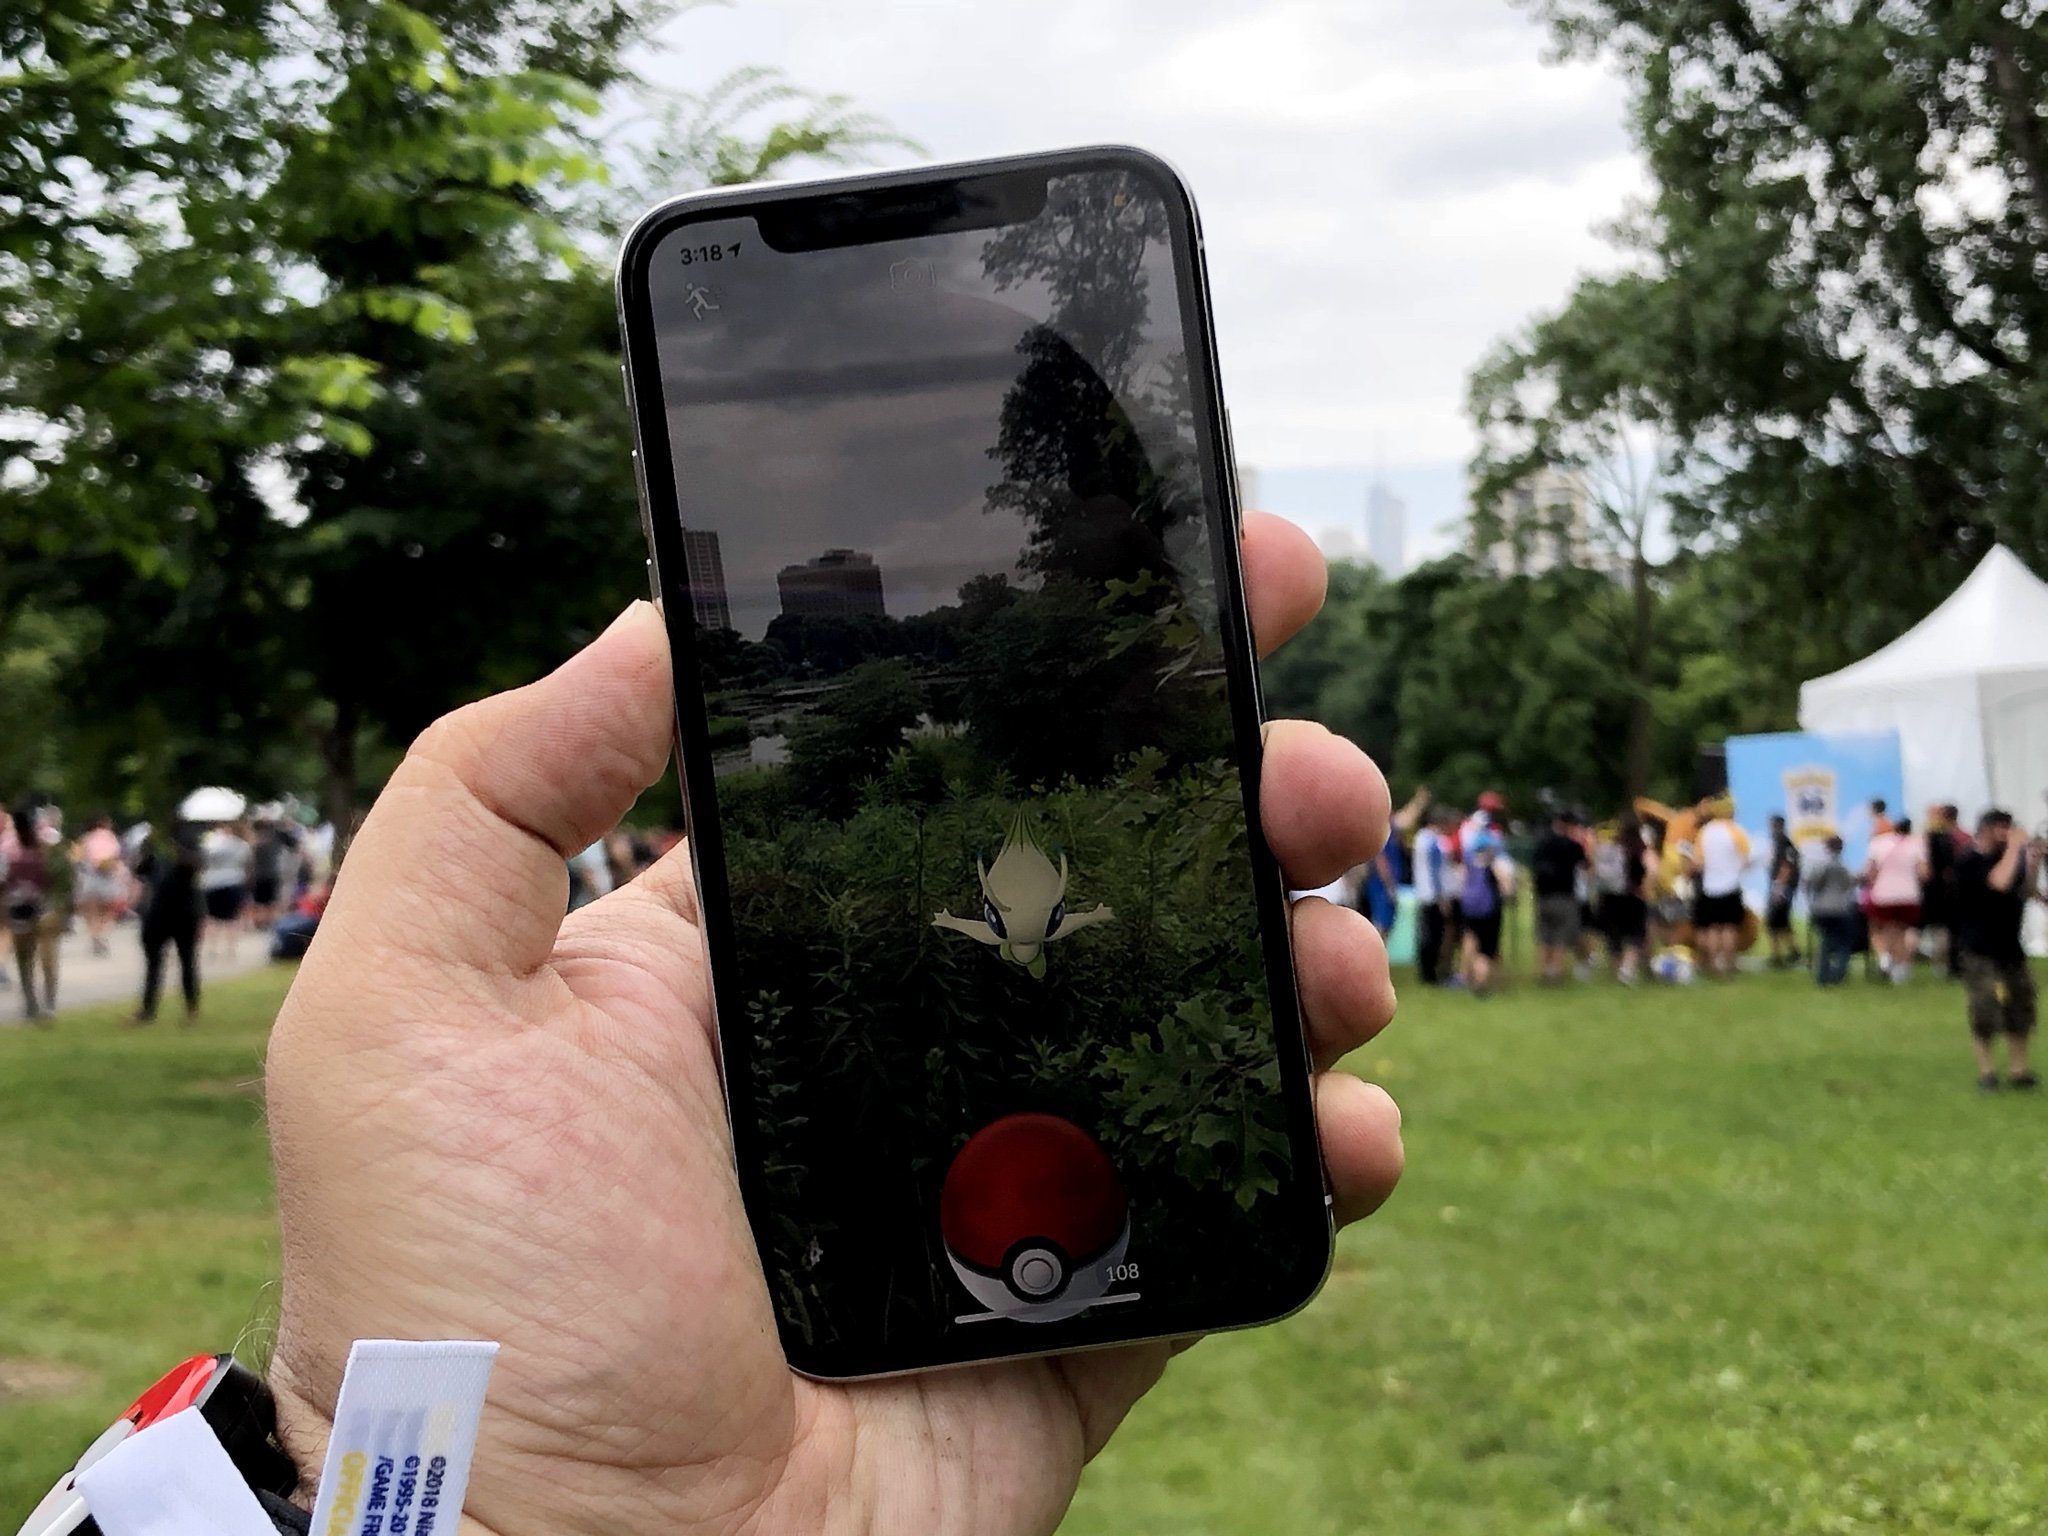 Pokémon GO Celebi - A Ripple In Time Special Research Walkthrough